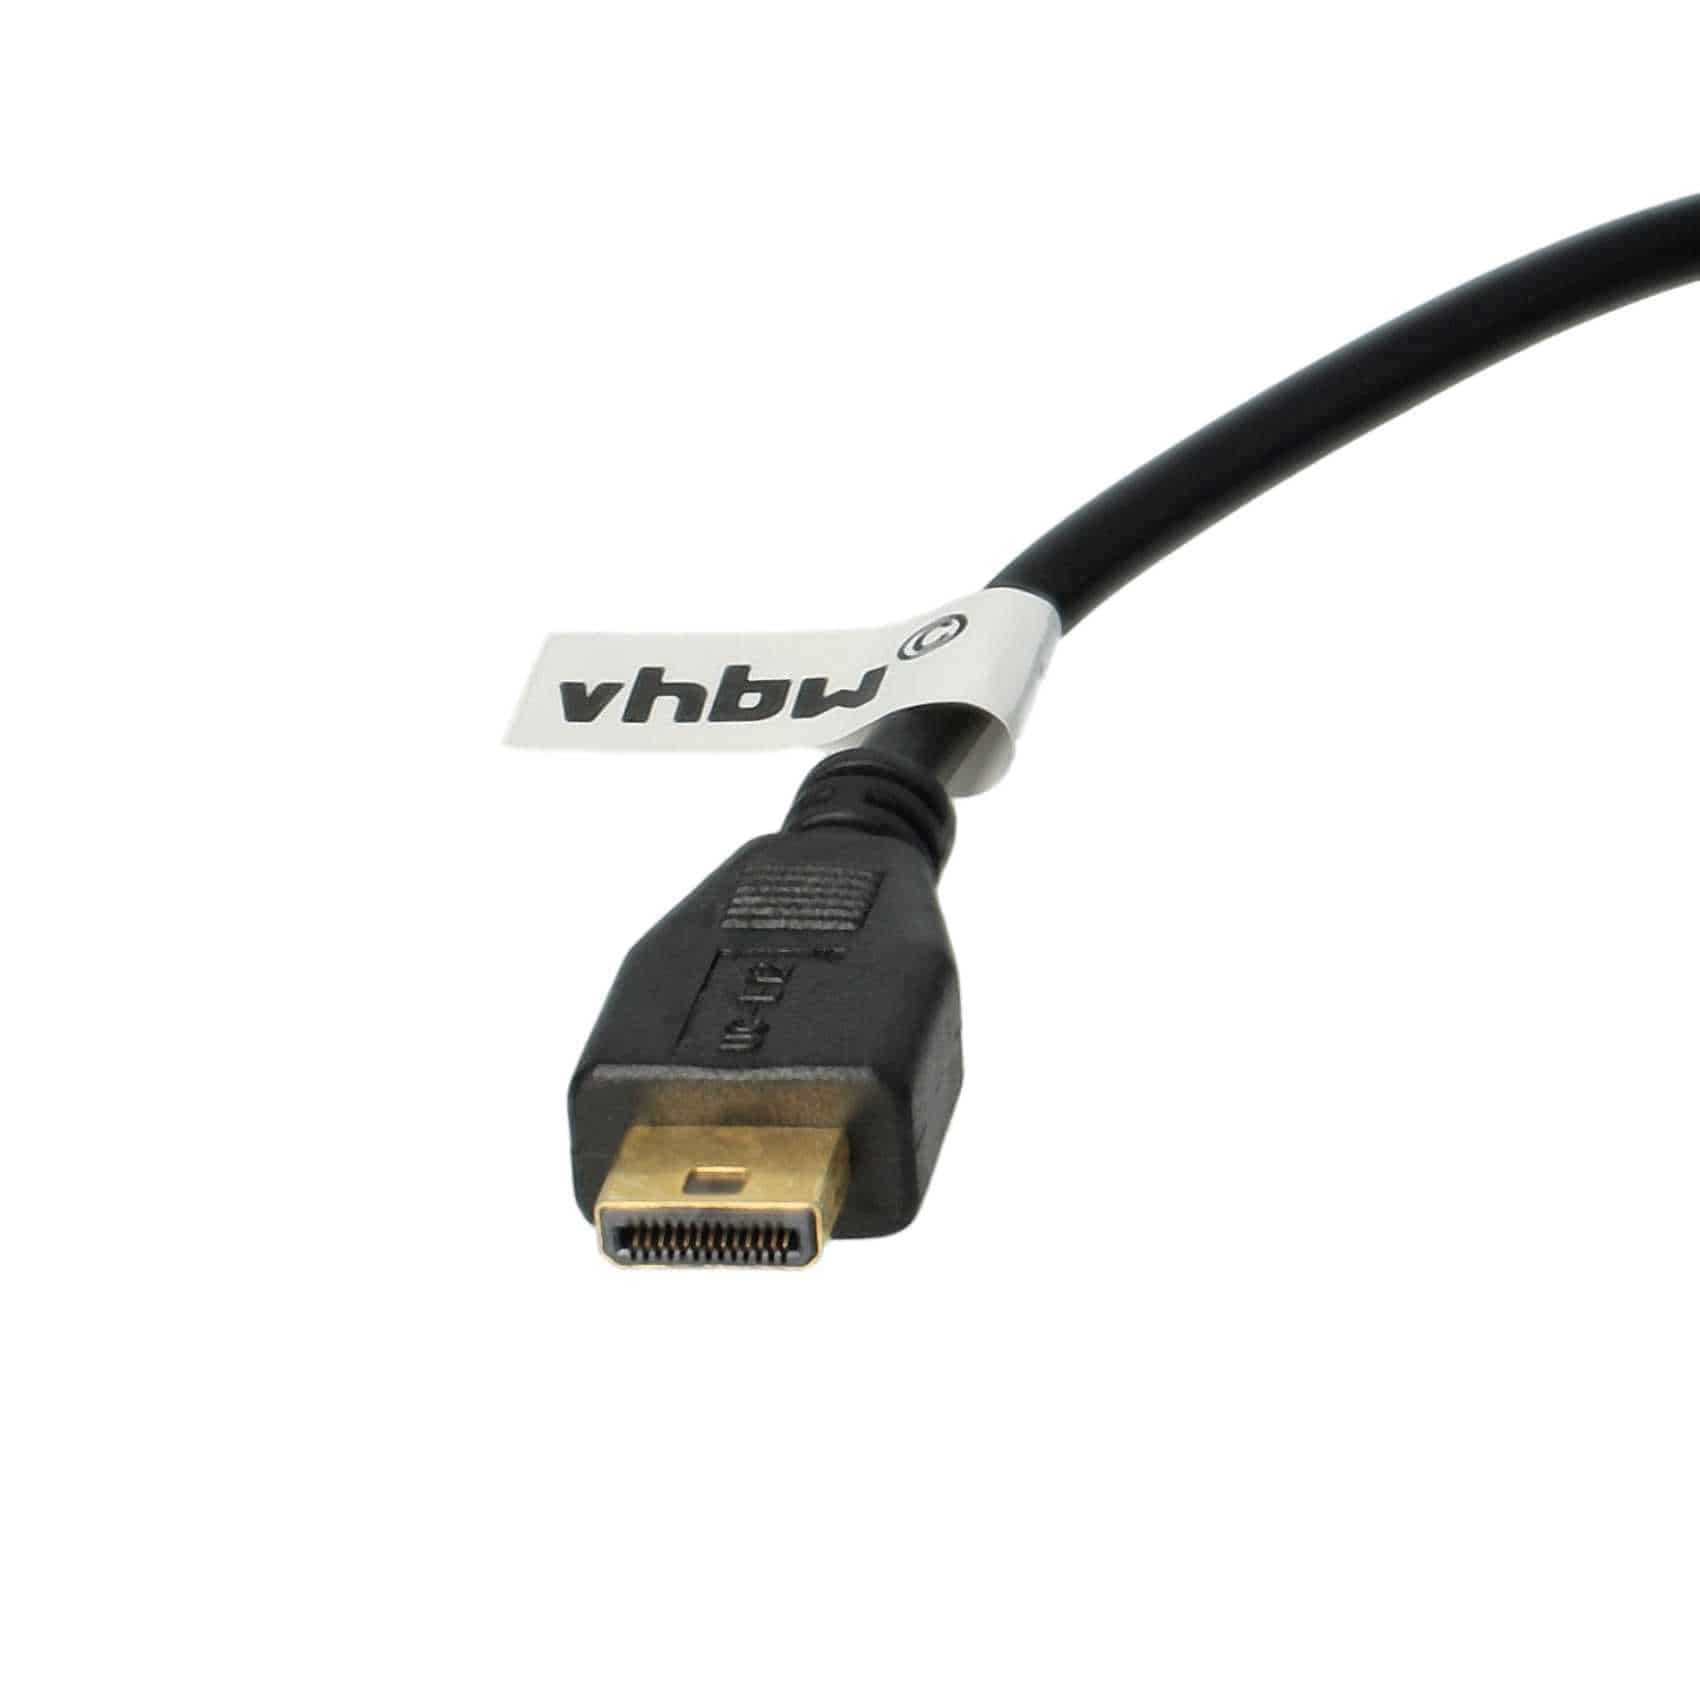 USB Data Cable replaces Nikon UC-E12 for Nikon Camera - 150 cm